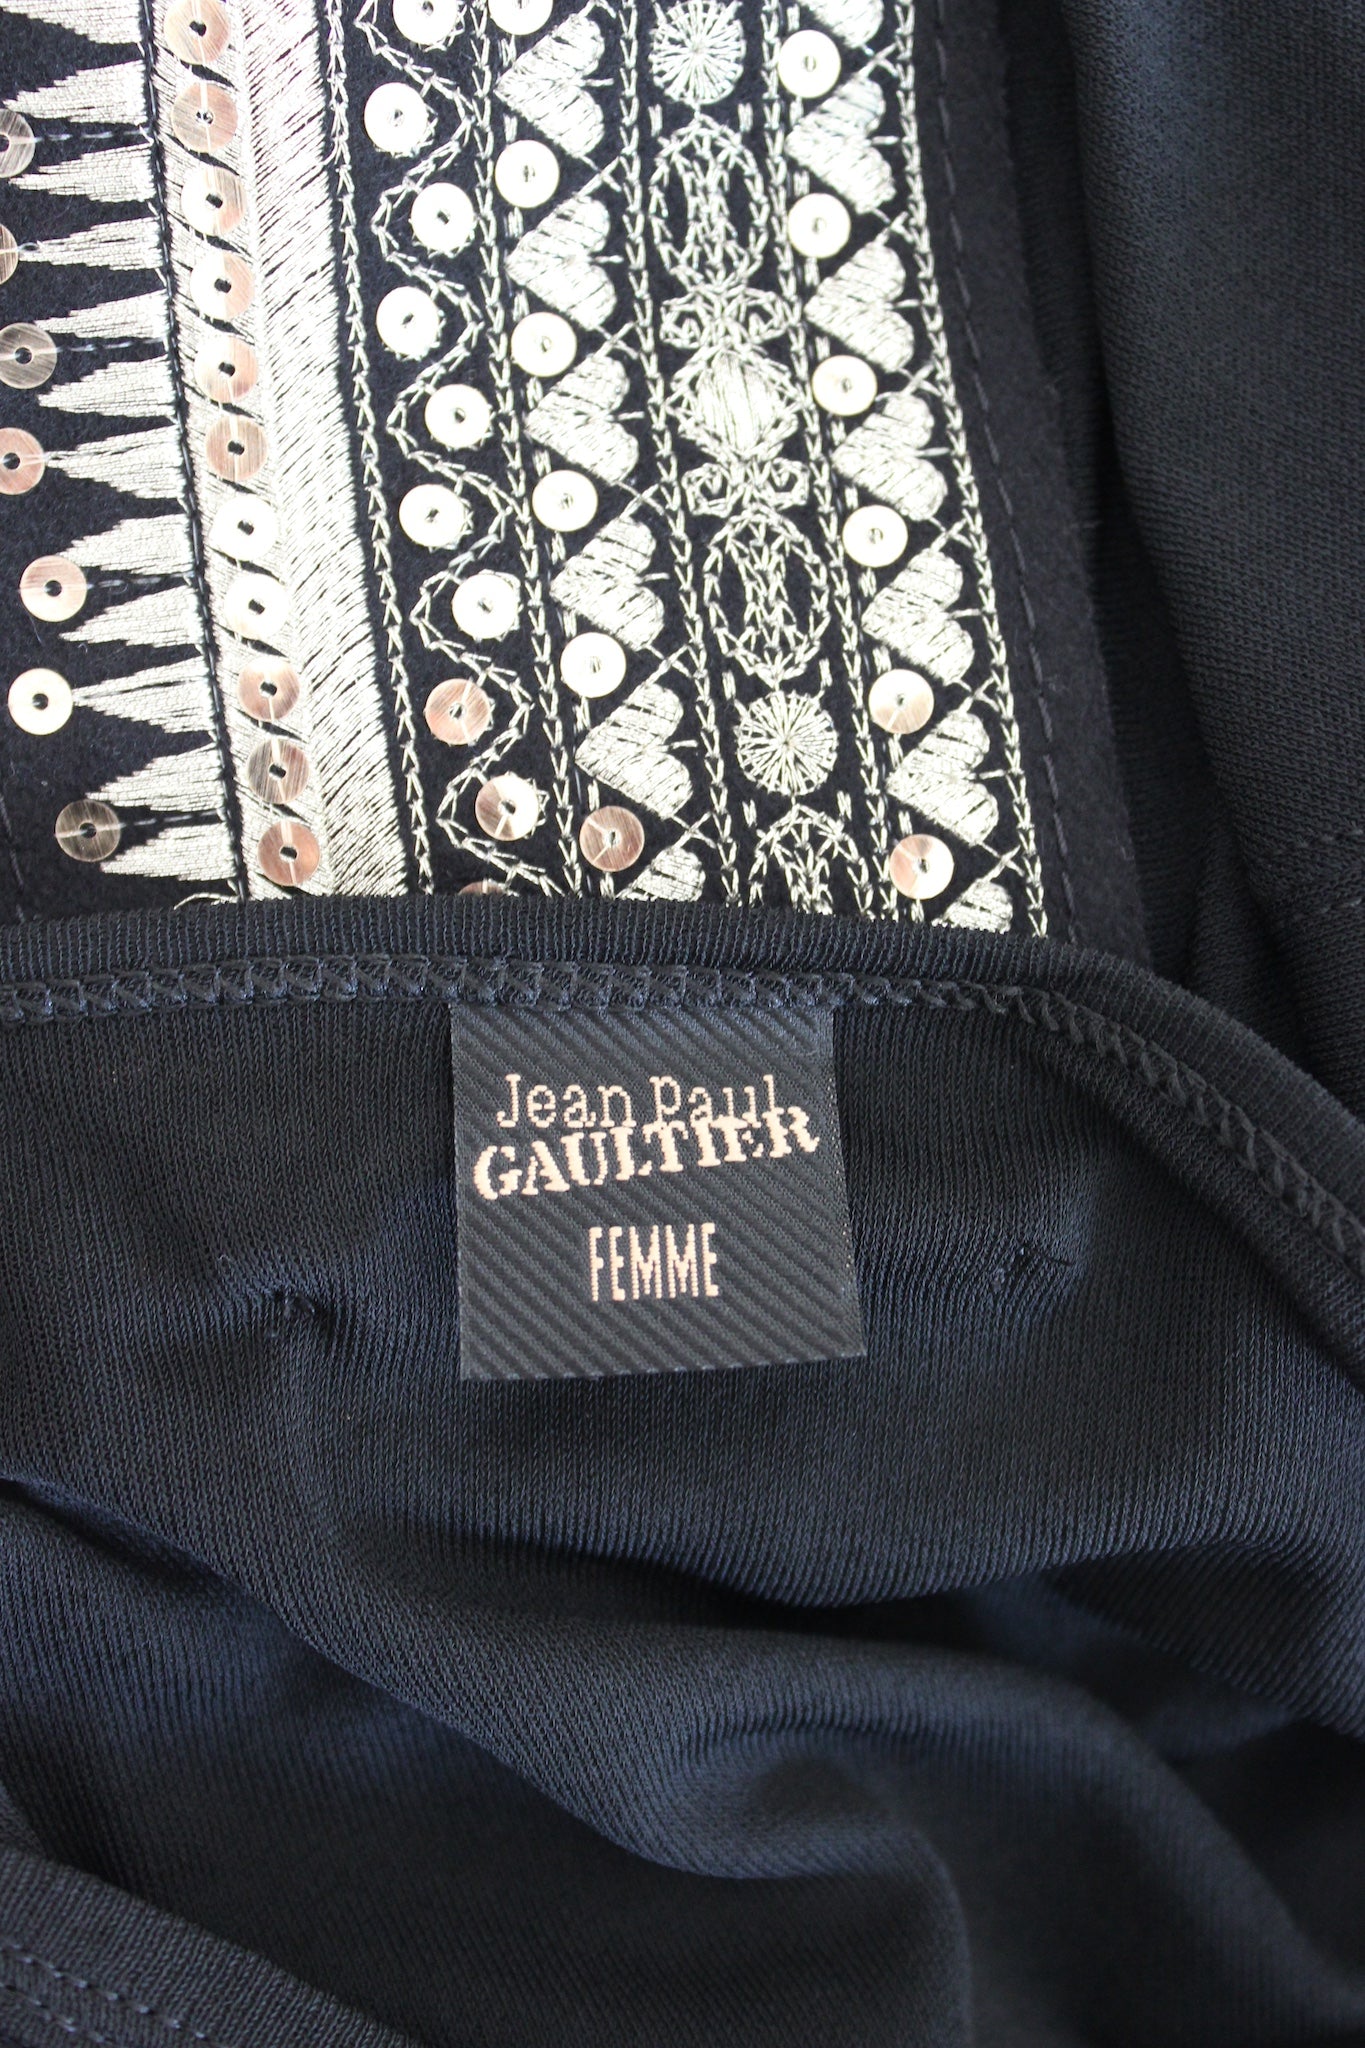 Jean Paul Gaultier Black Leather T Shirt 2000s